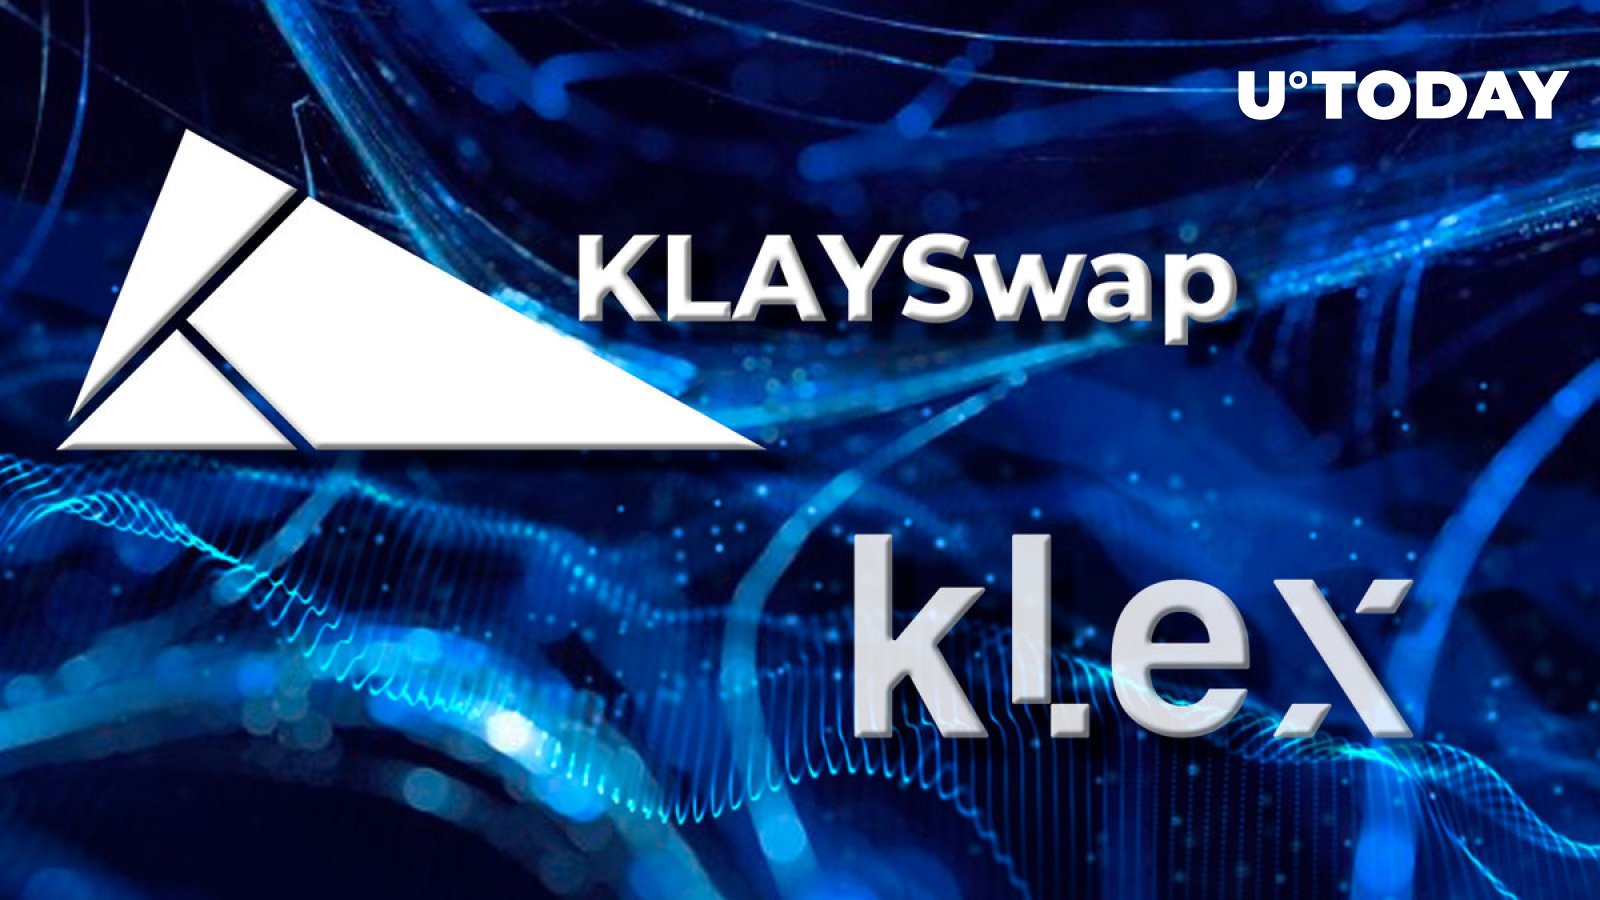 KLEX Finance Launches Raid on Klayswap to Siphon Liquidity